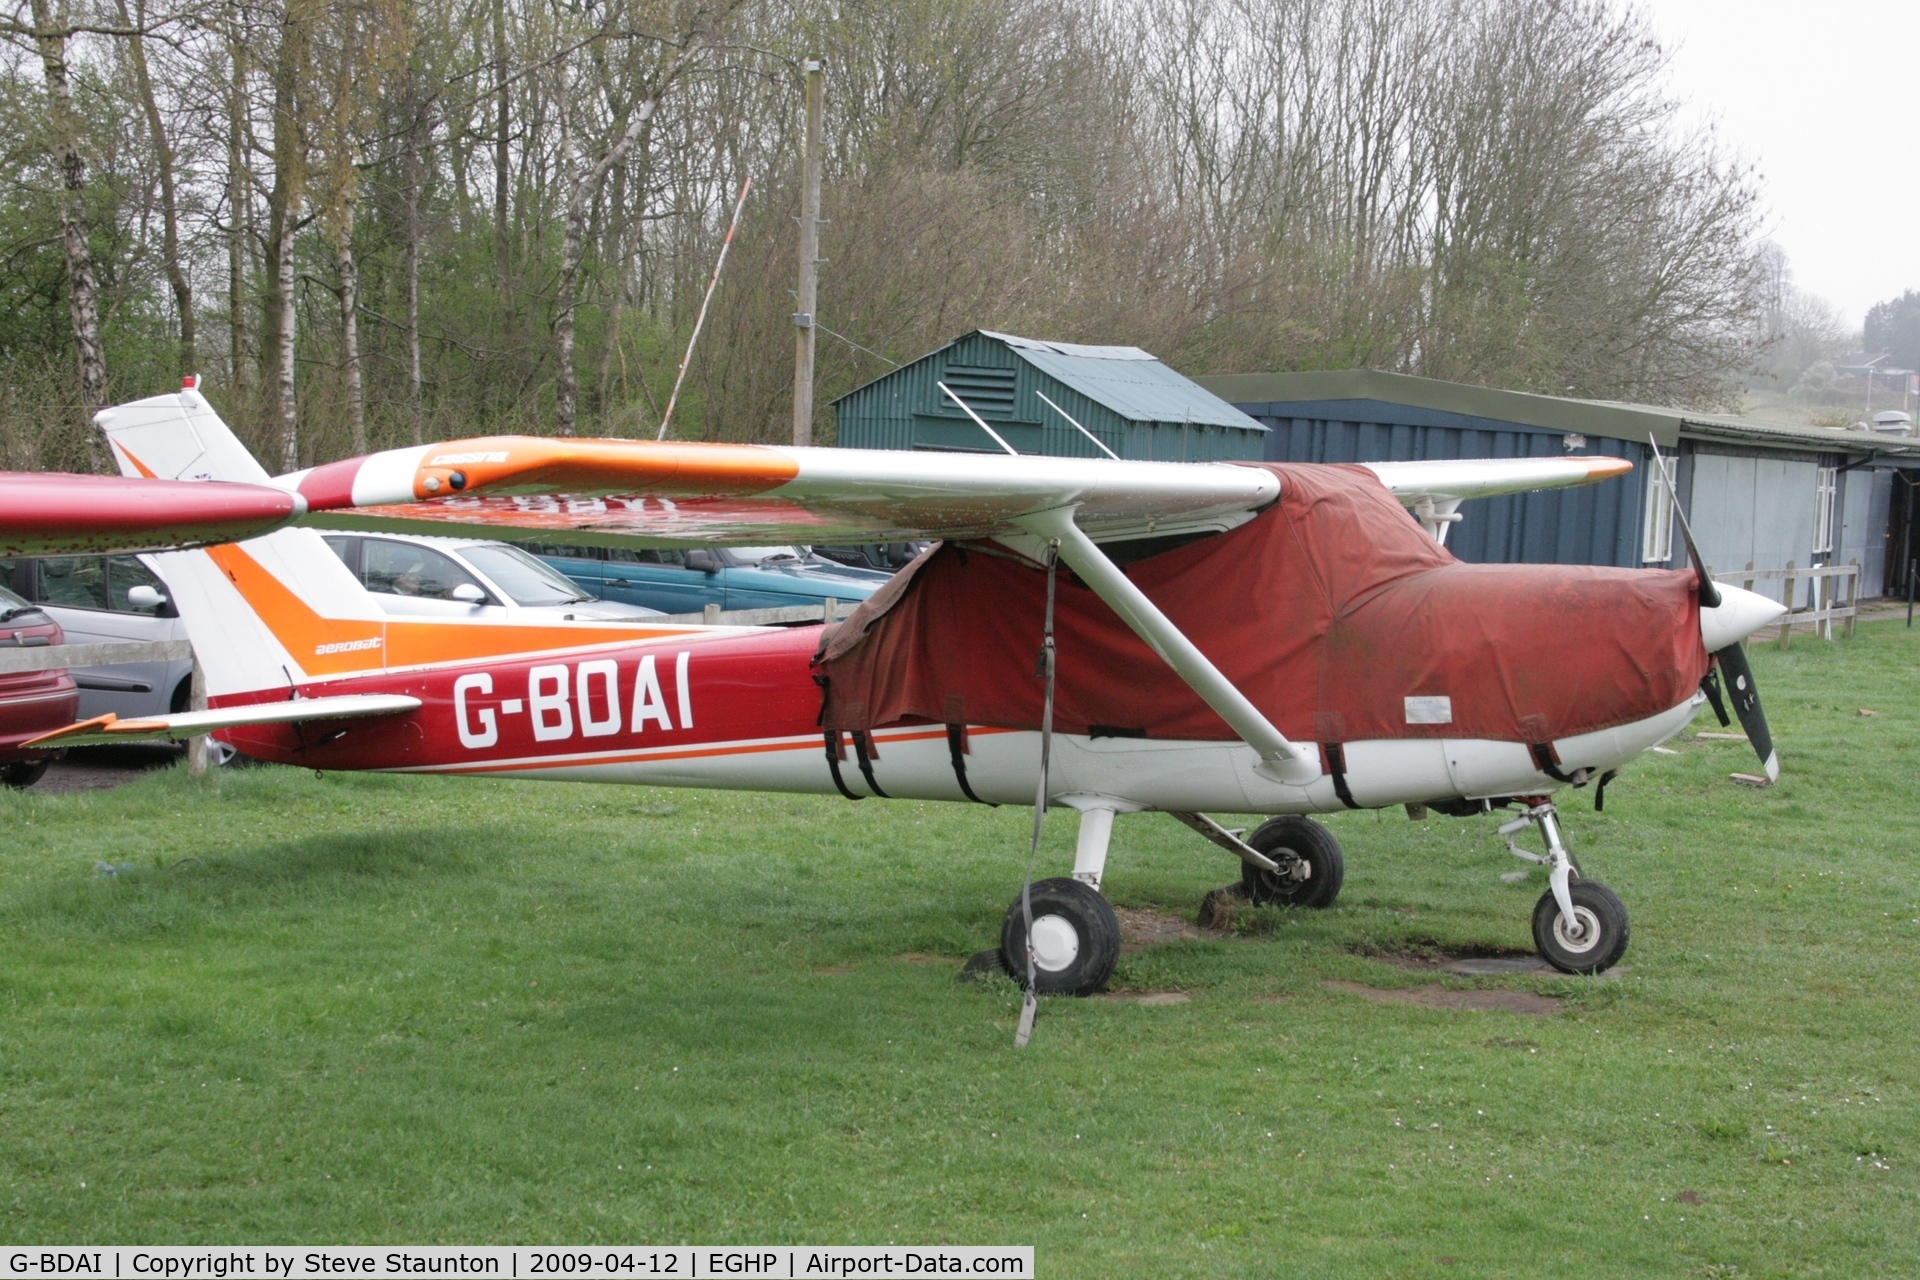 G-BDAI, 1975 Reims F150M C/N 0266, Taken at Popham Airfield, England on a gloomy April Sunday (12/04/09)